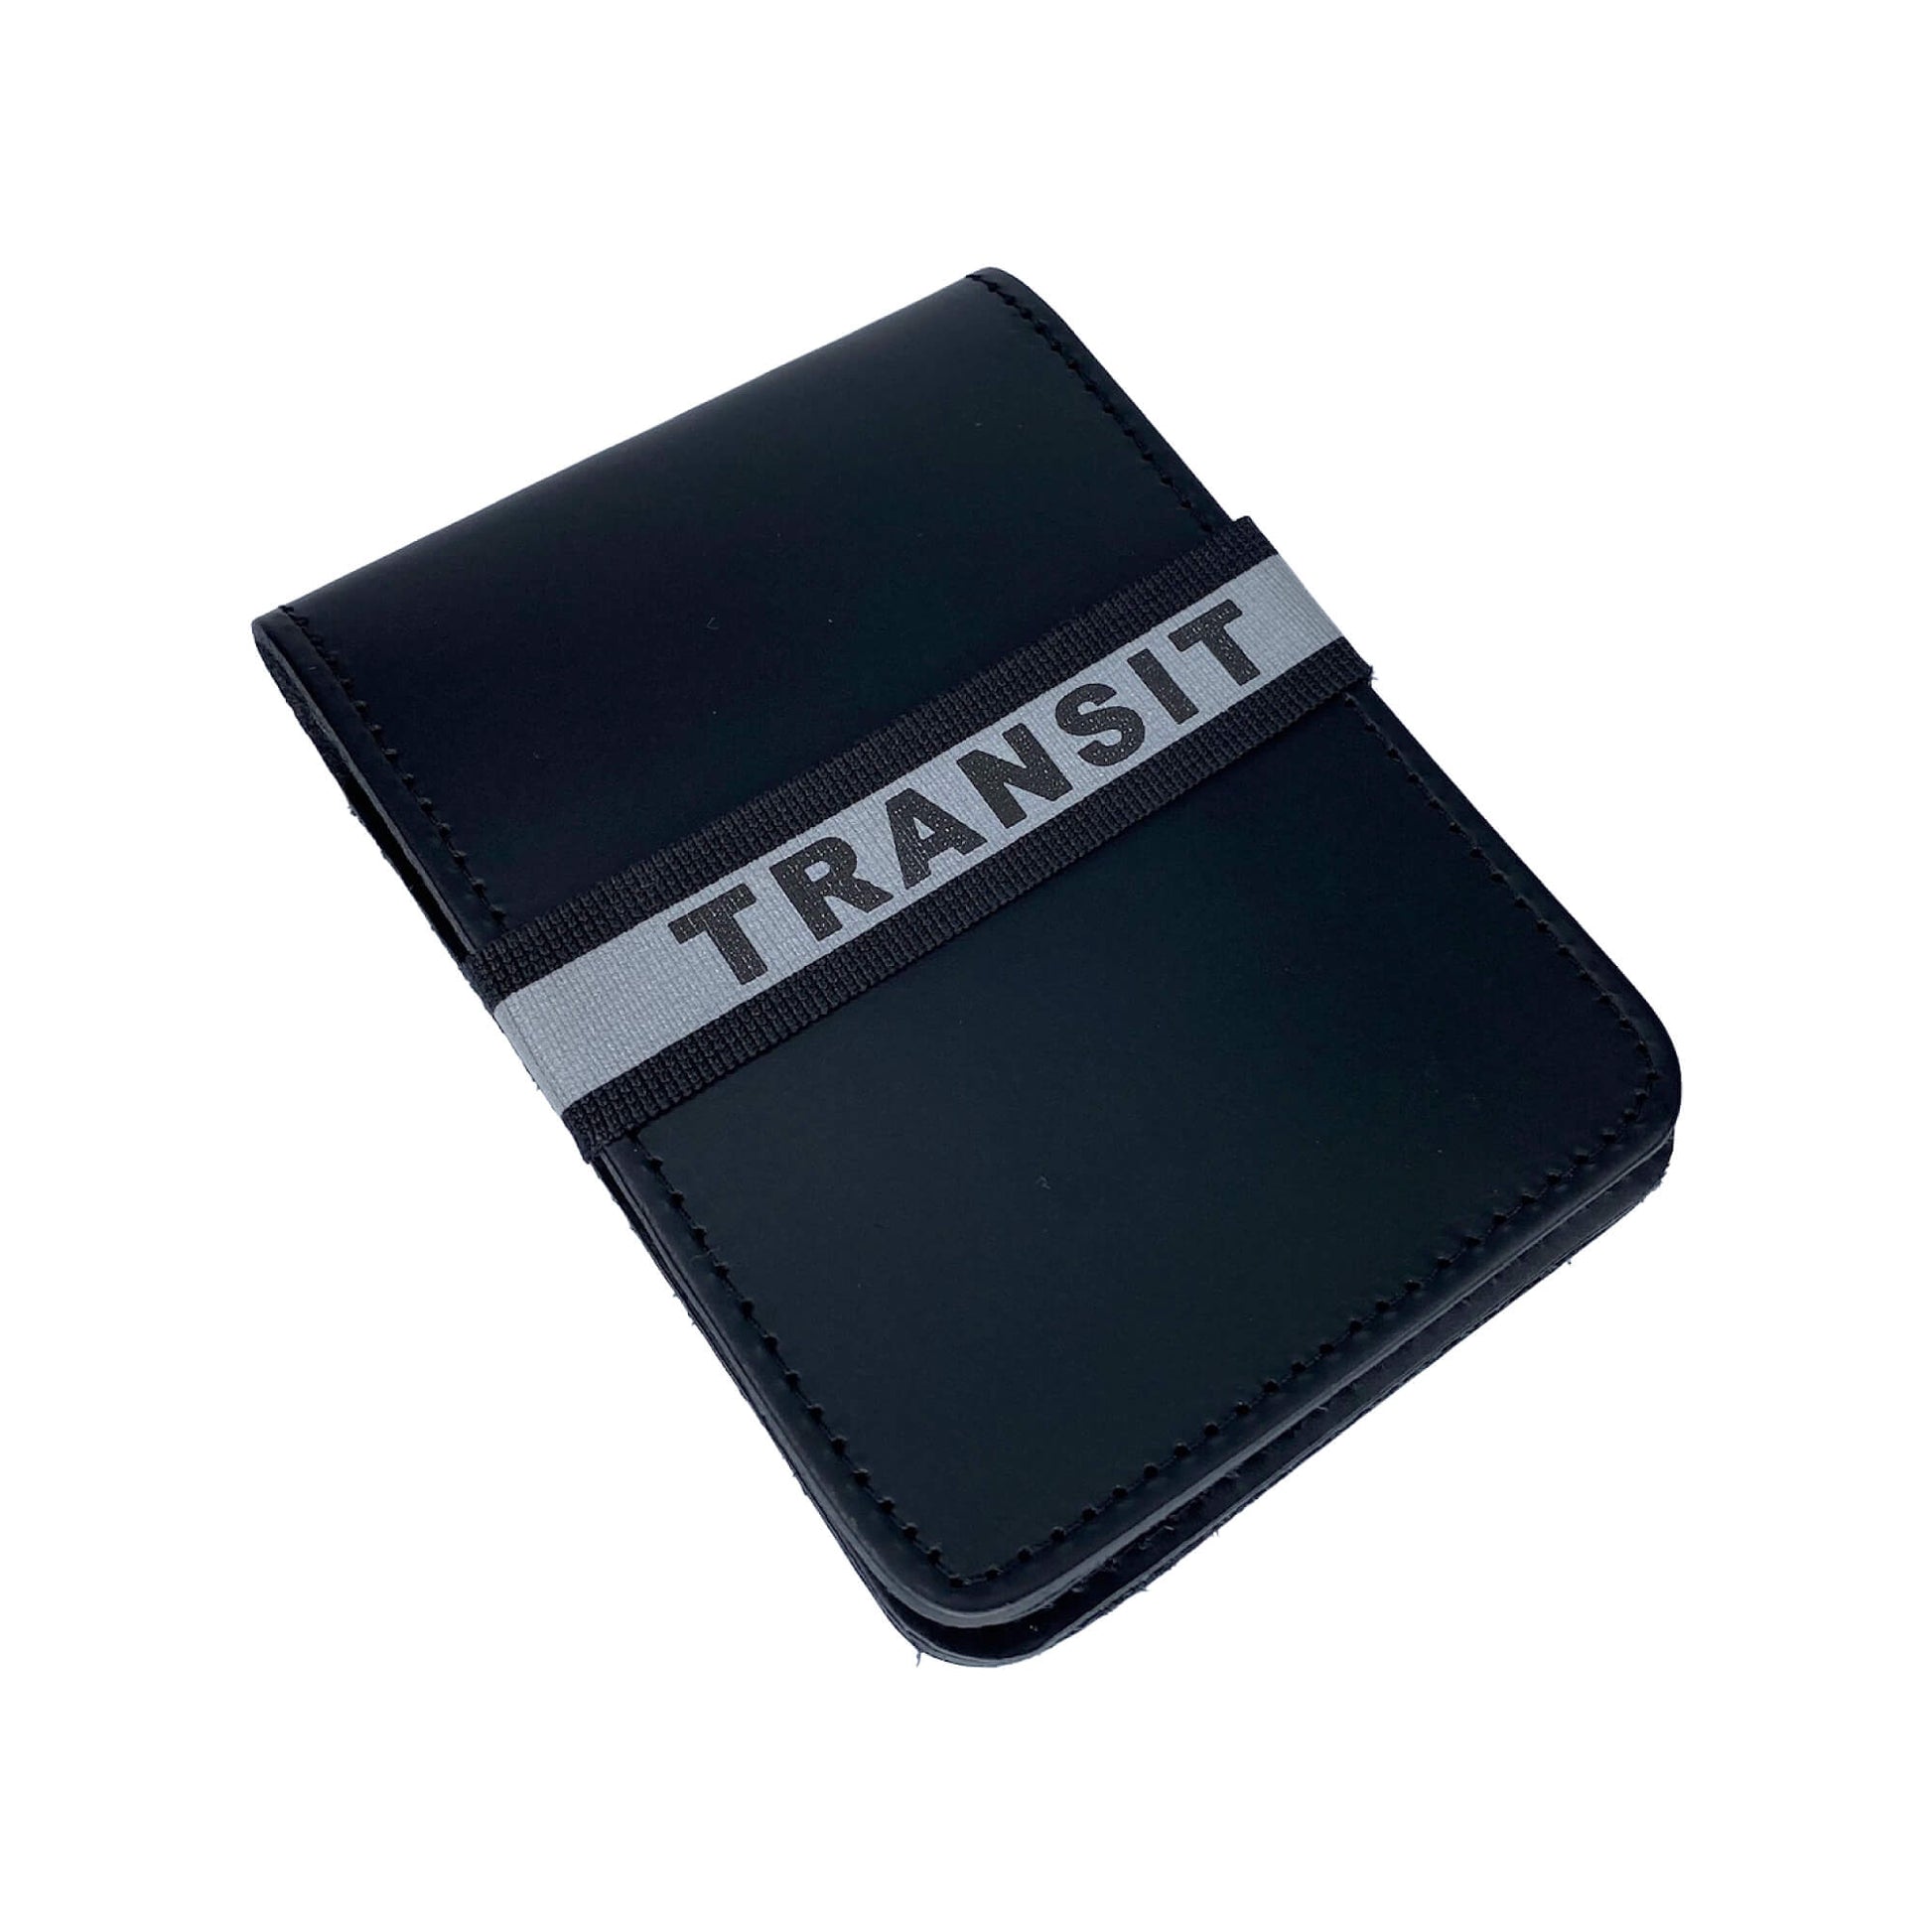 Transit Notebook ID Band-Notebands-911 Duty Gear Canada